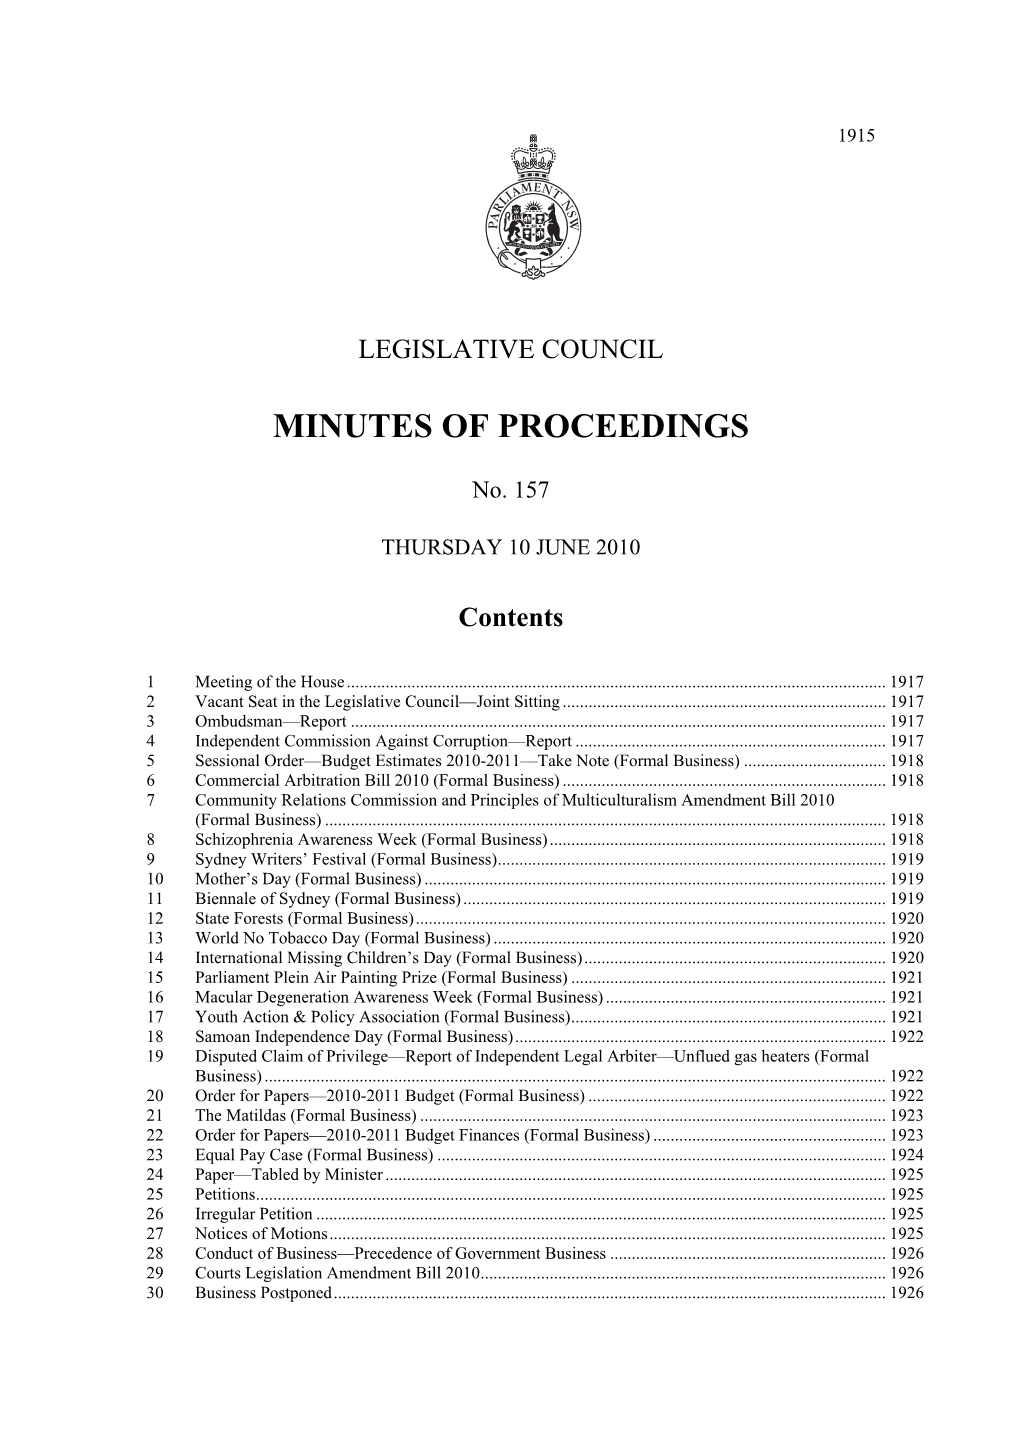 Minutes No. 157—Thursday 10 June 2010